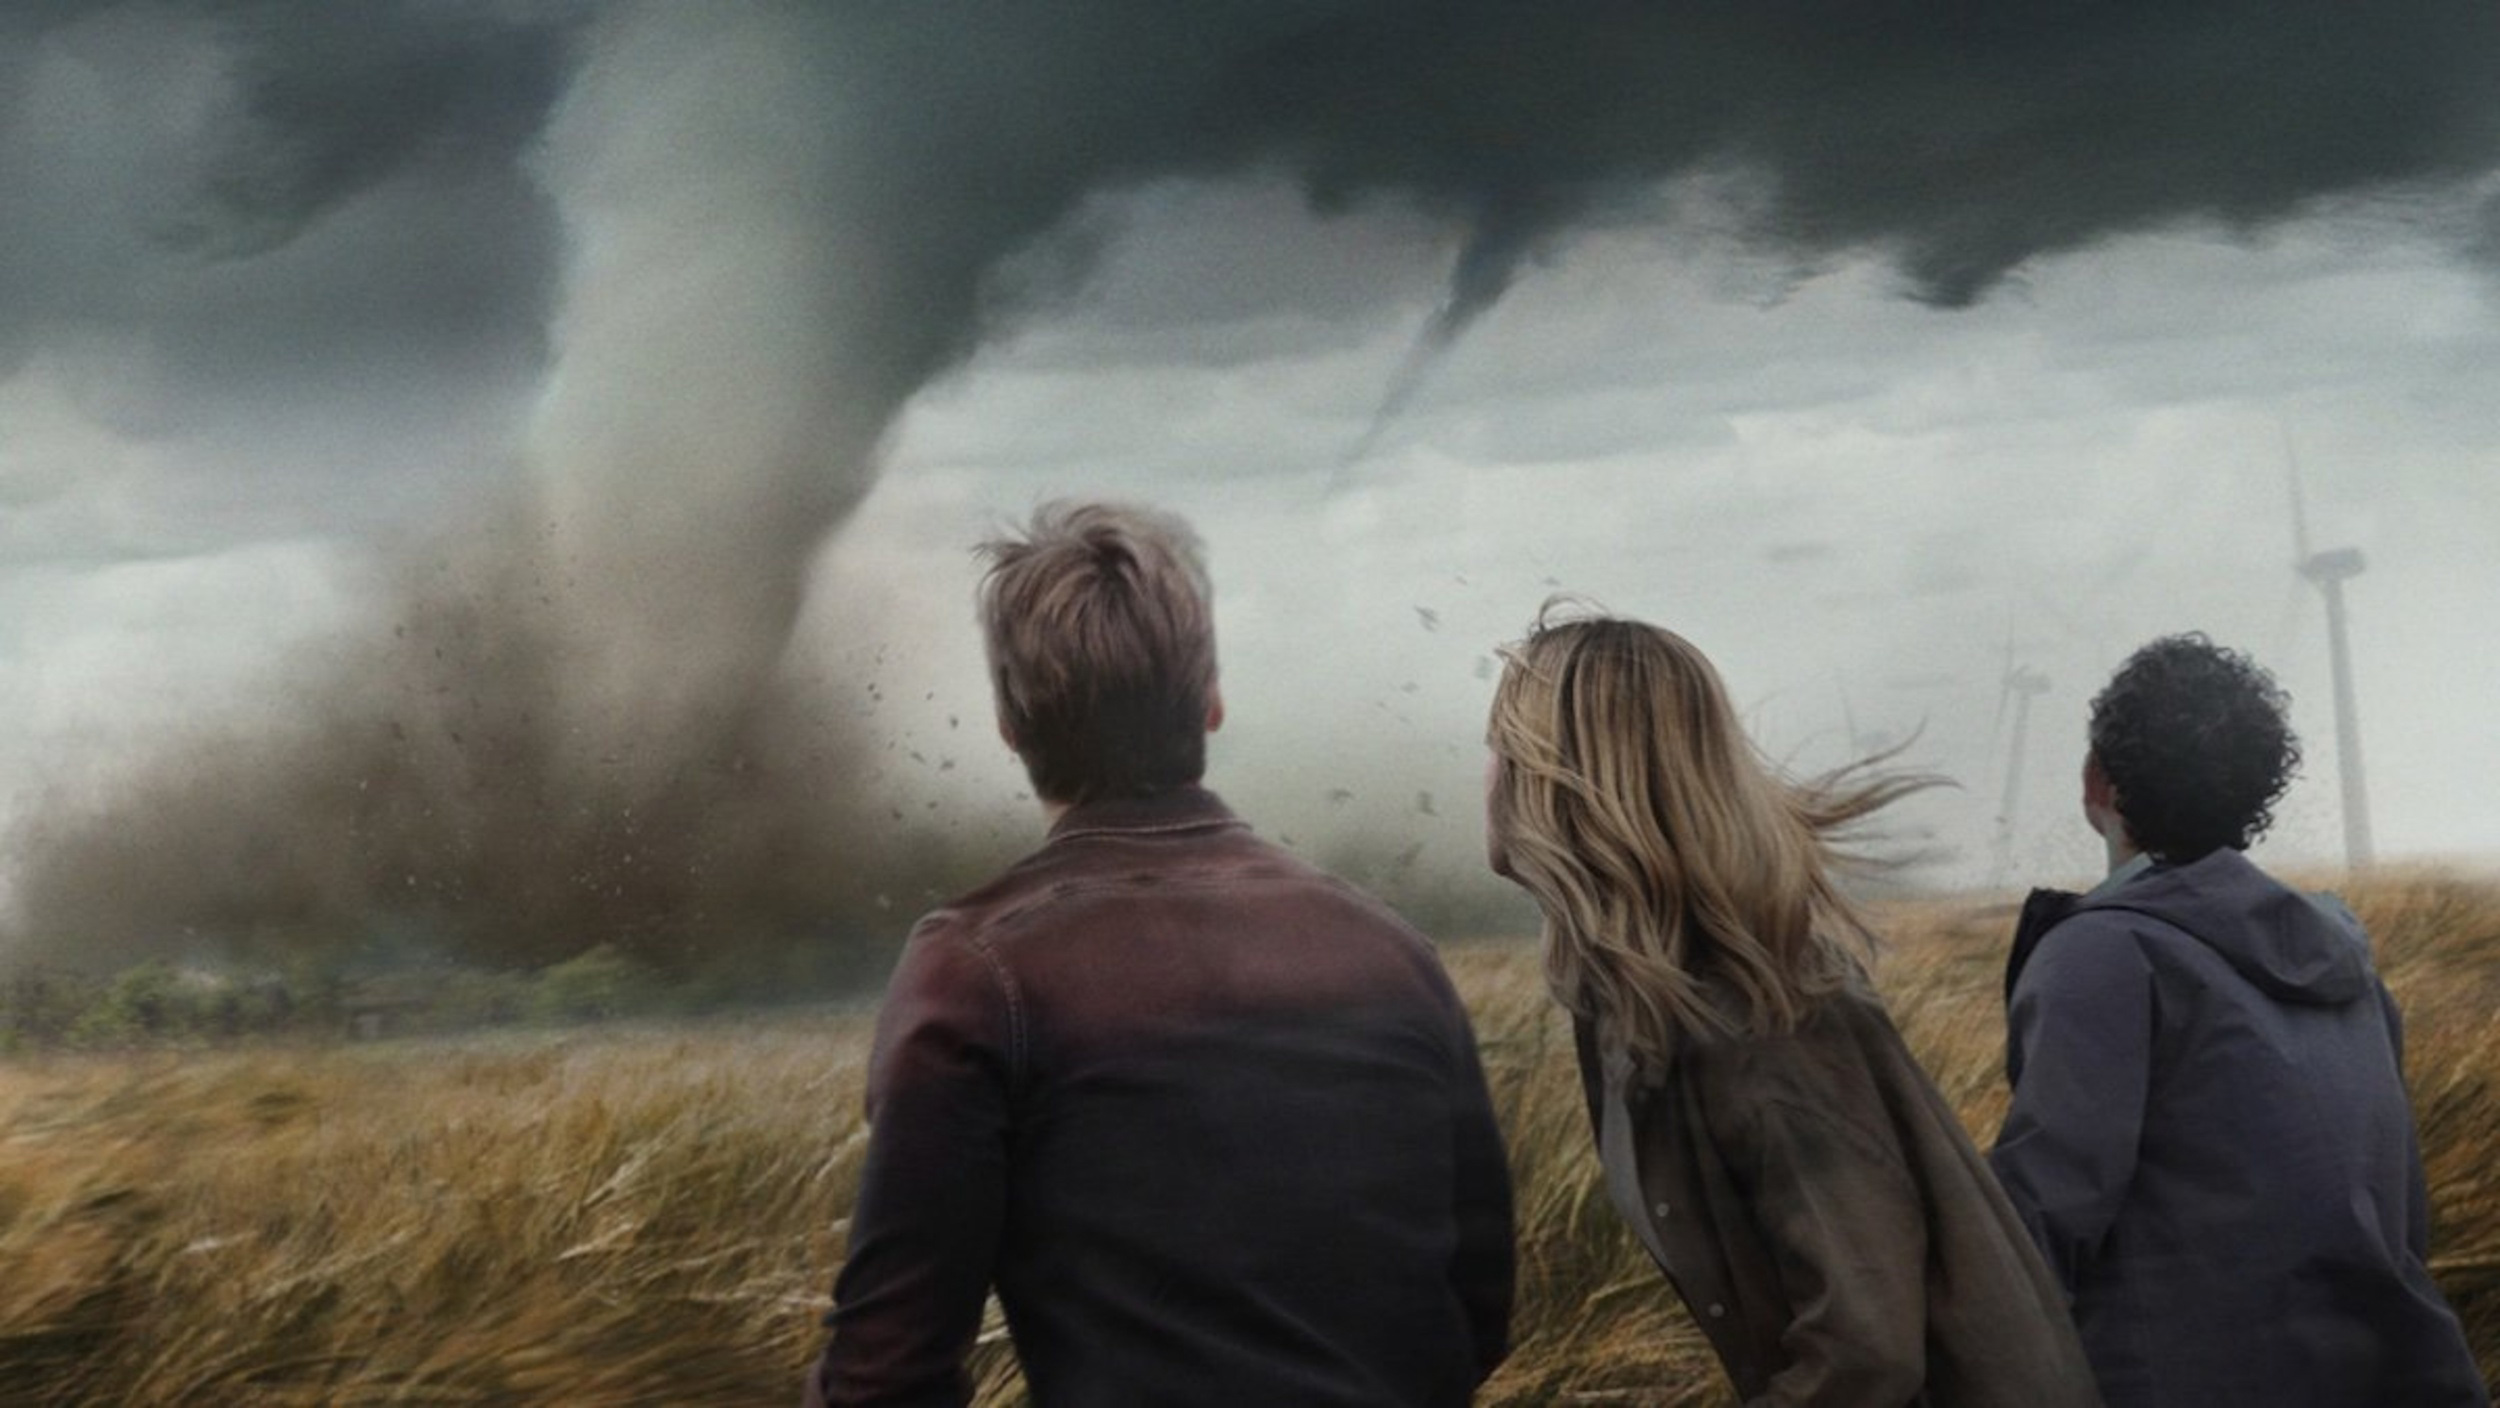 TWISTERS Trailer Spins Up a Fresh Tornado Hunt